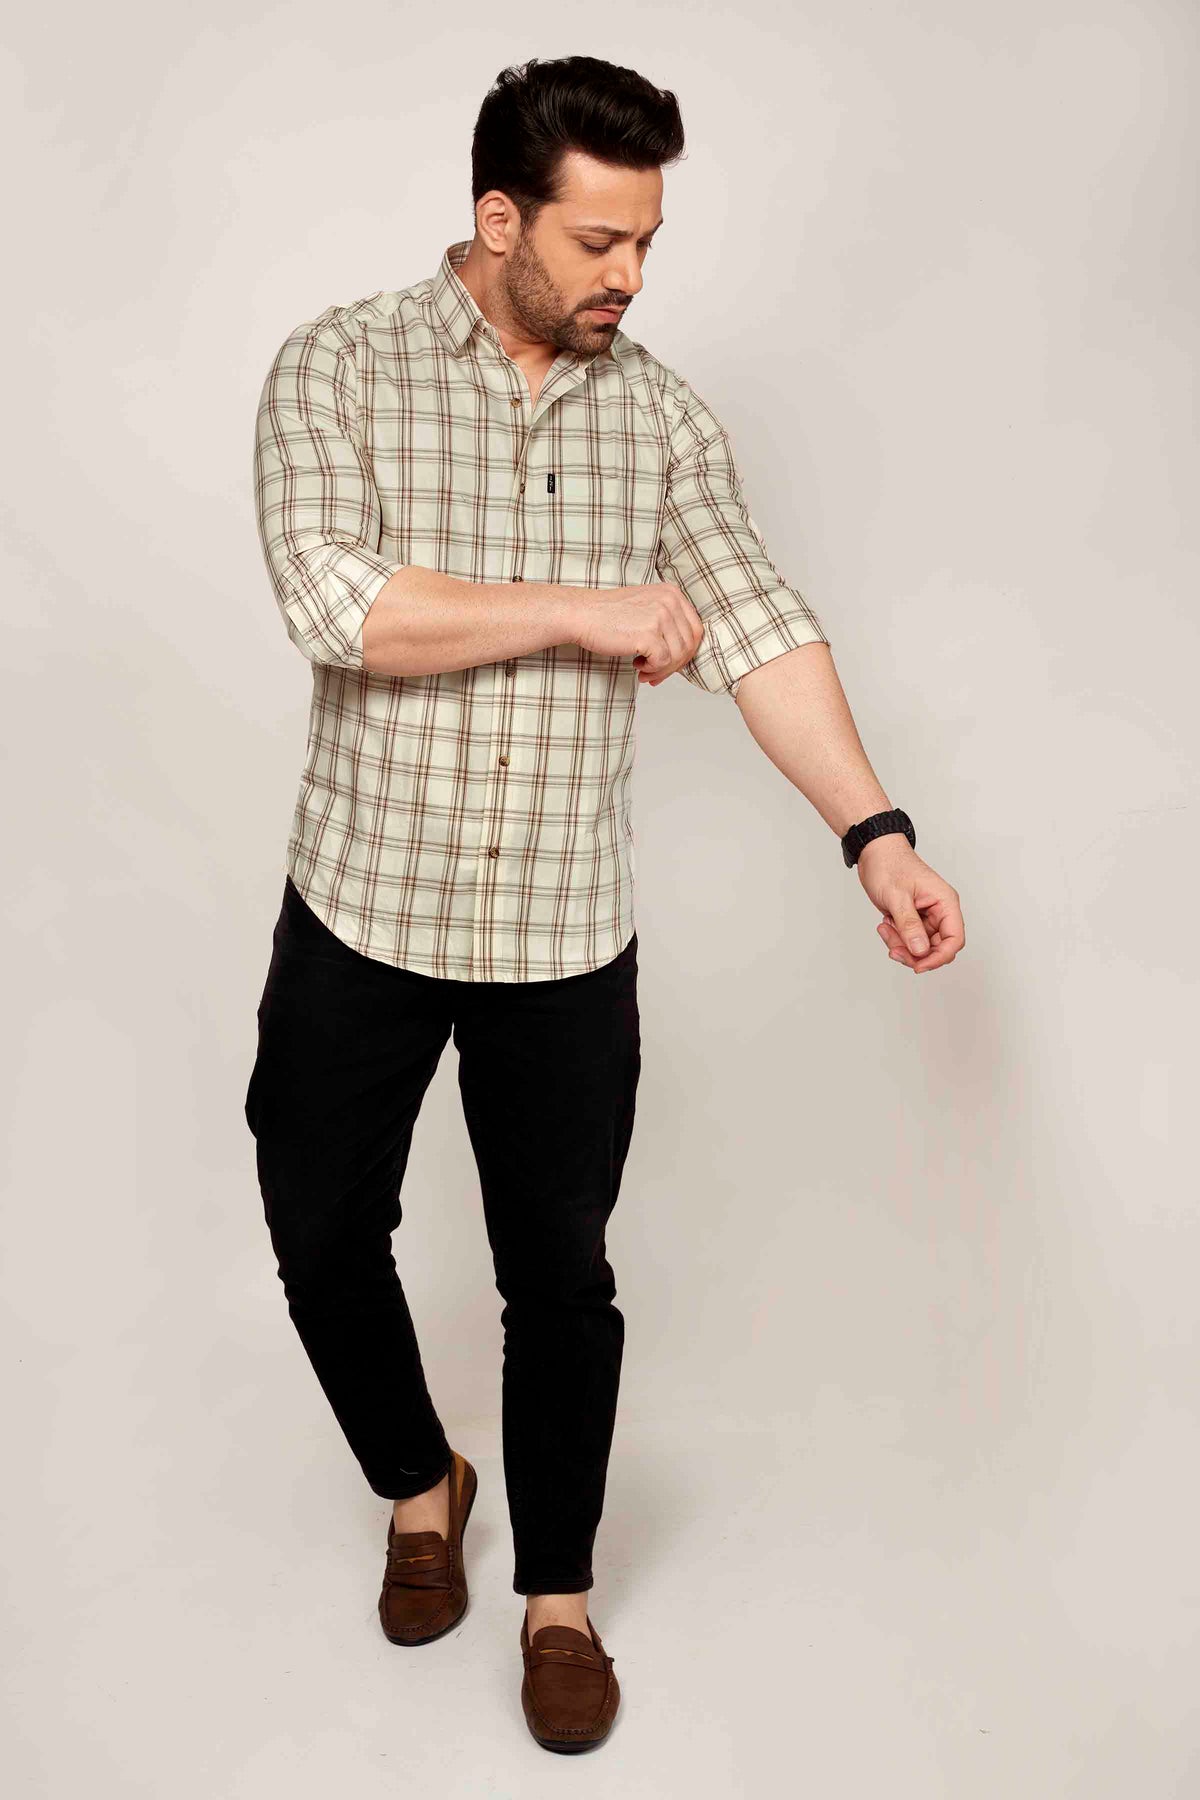 Thanet - Checkered Slim fit shirt - John Watson